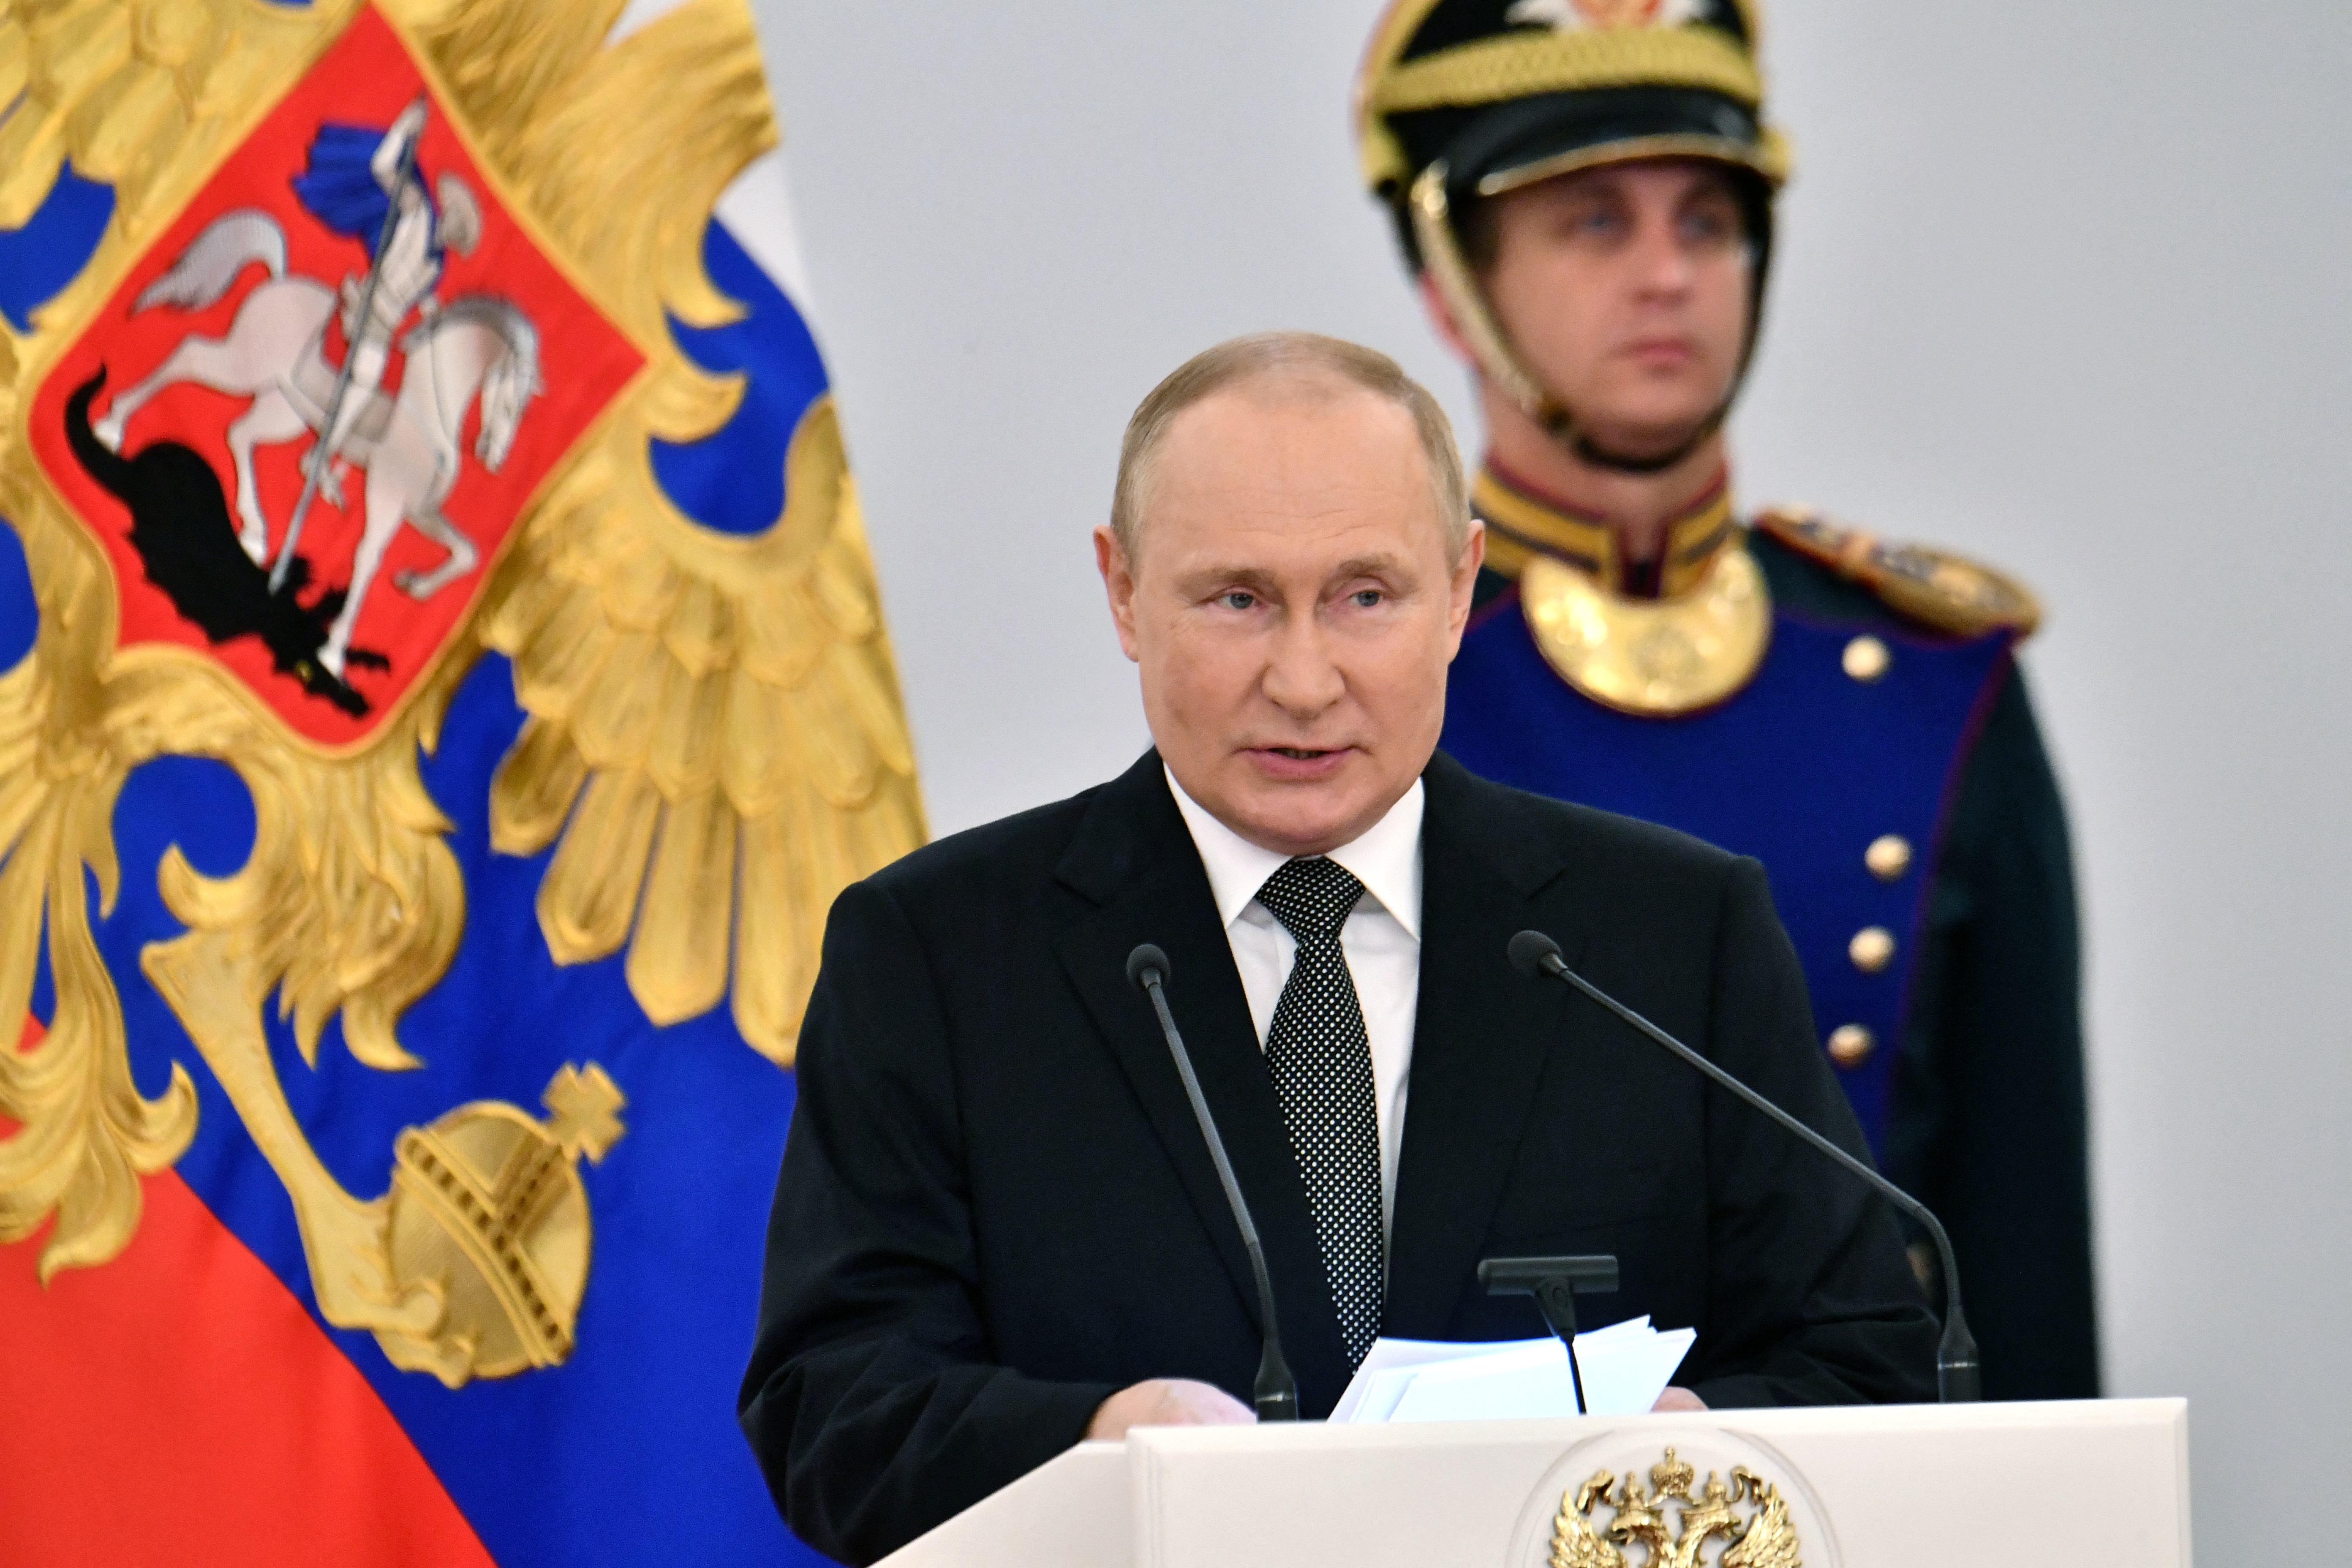 El Papa pareció acresarse las posturas de Vladimir Putin, aunque lugo lo negó